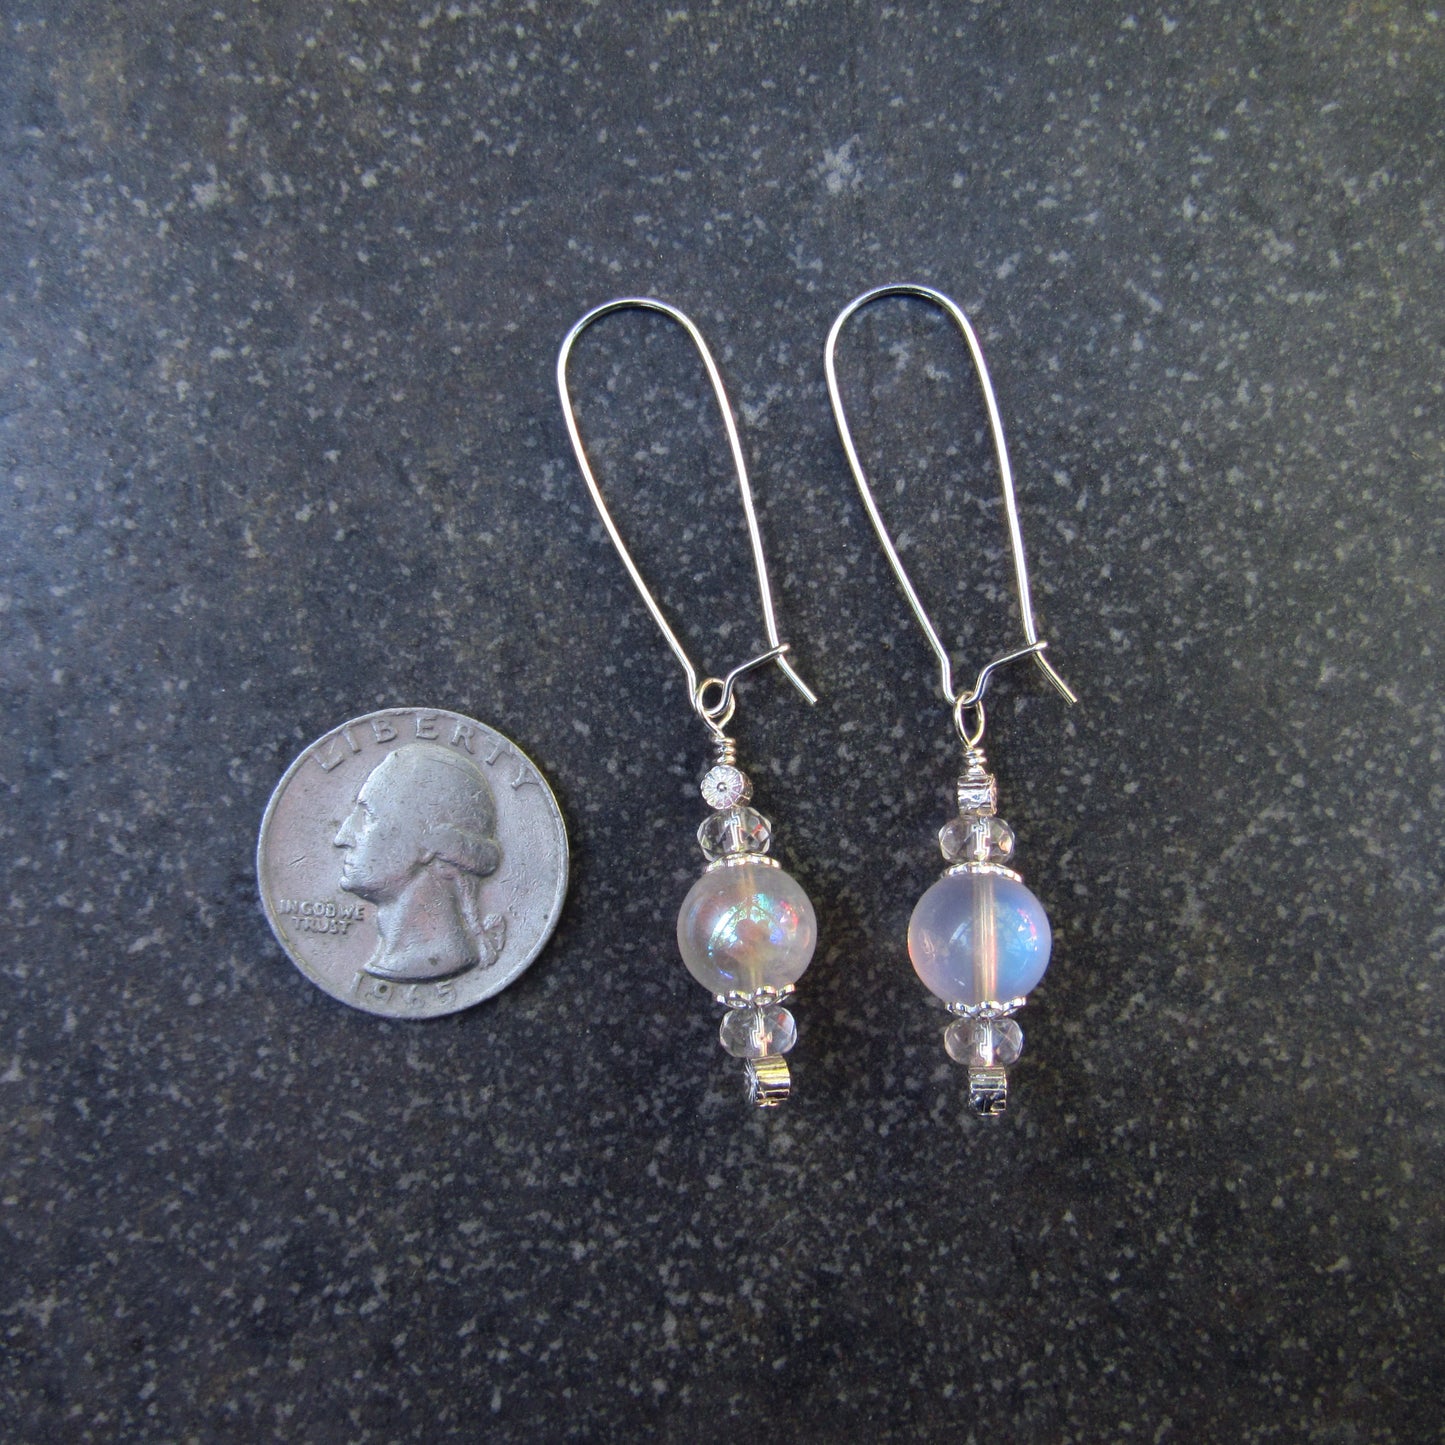 Moonstone Gemstone, Quartz, and Sterling Silver Earrings